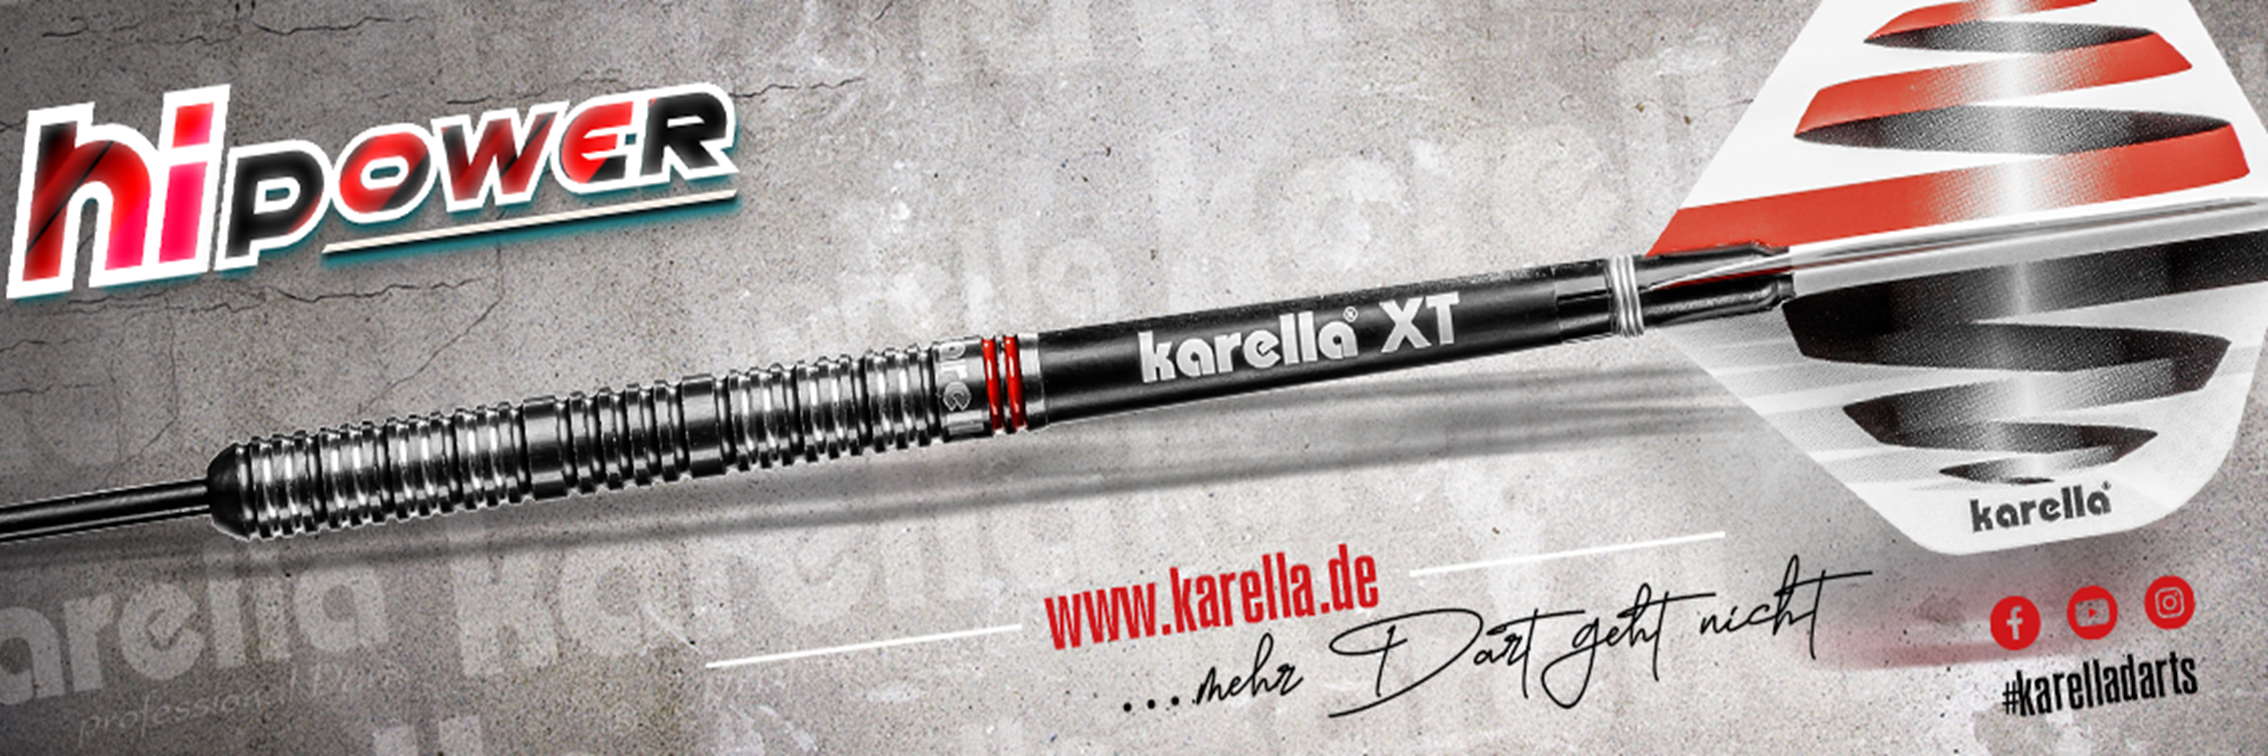 Karella-Steeldart-Banner